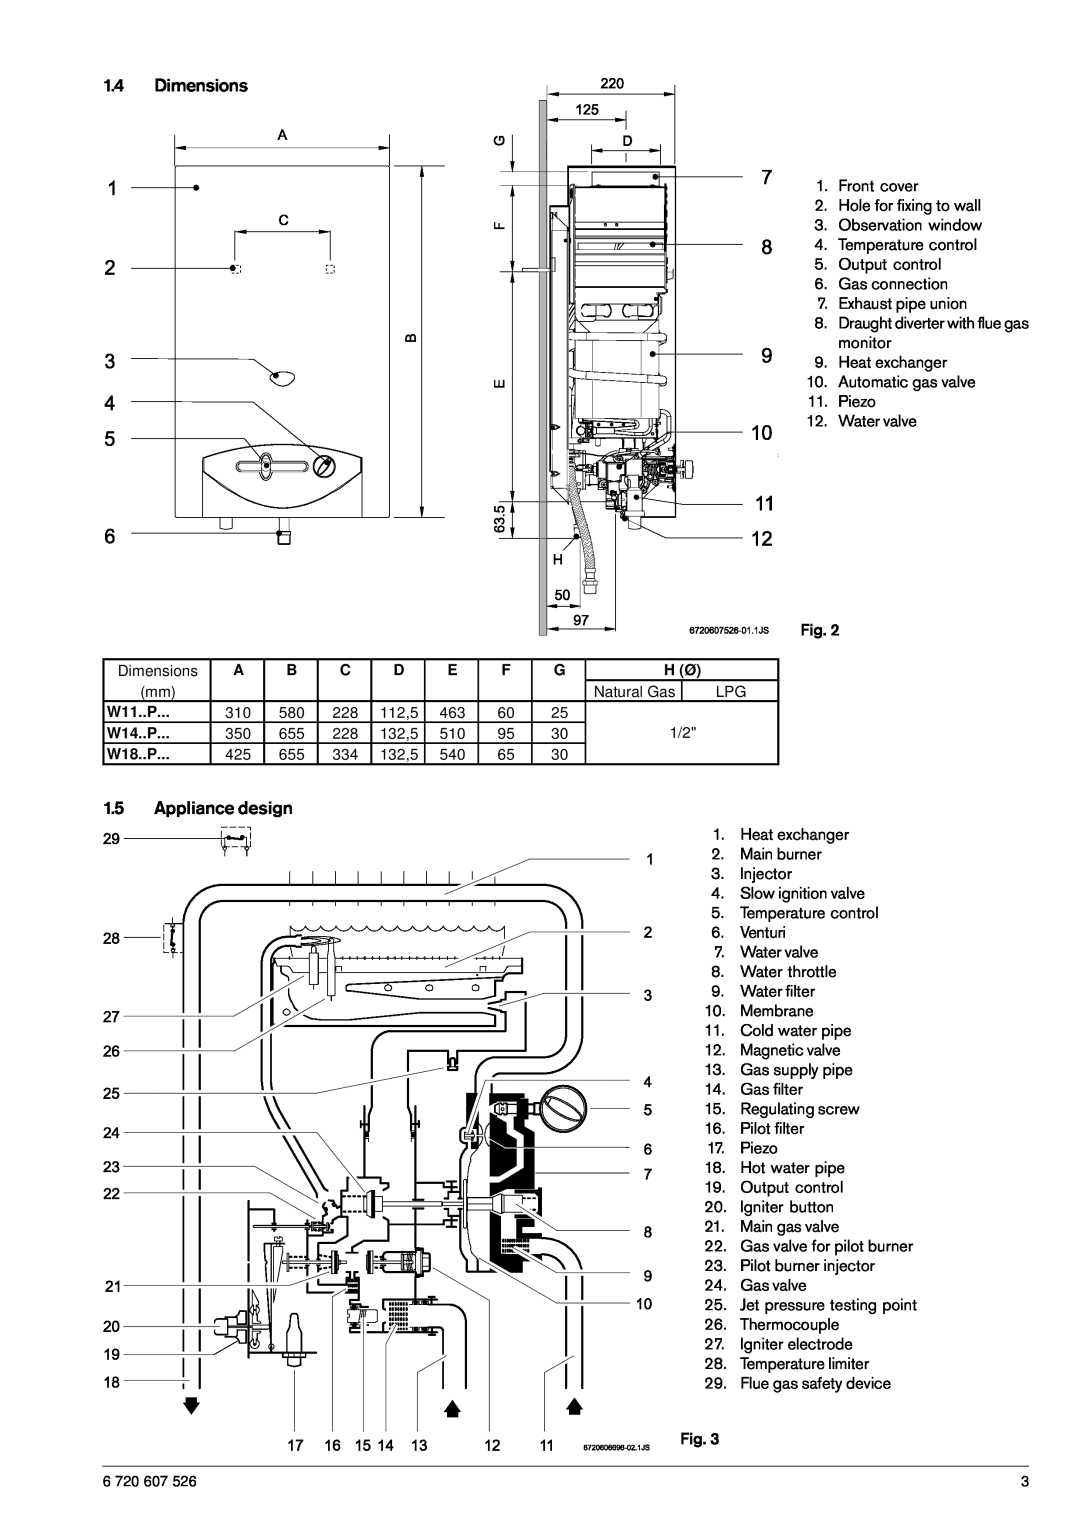 Bosch Appliances W14P, W11P, W18P manual Dimensions, Appliance design 